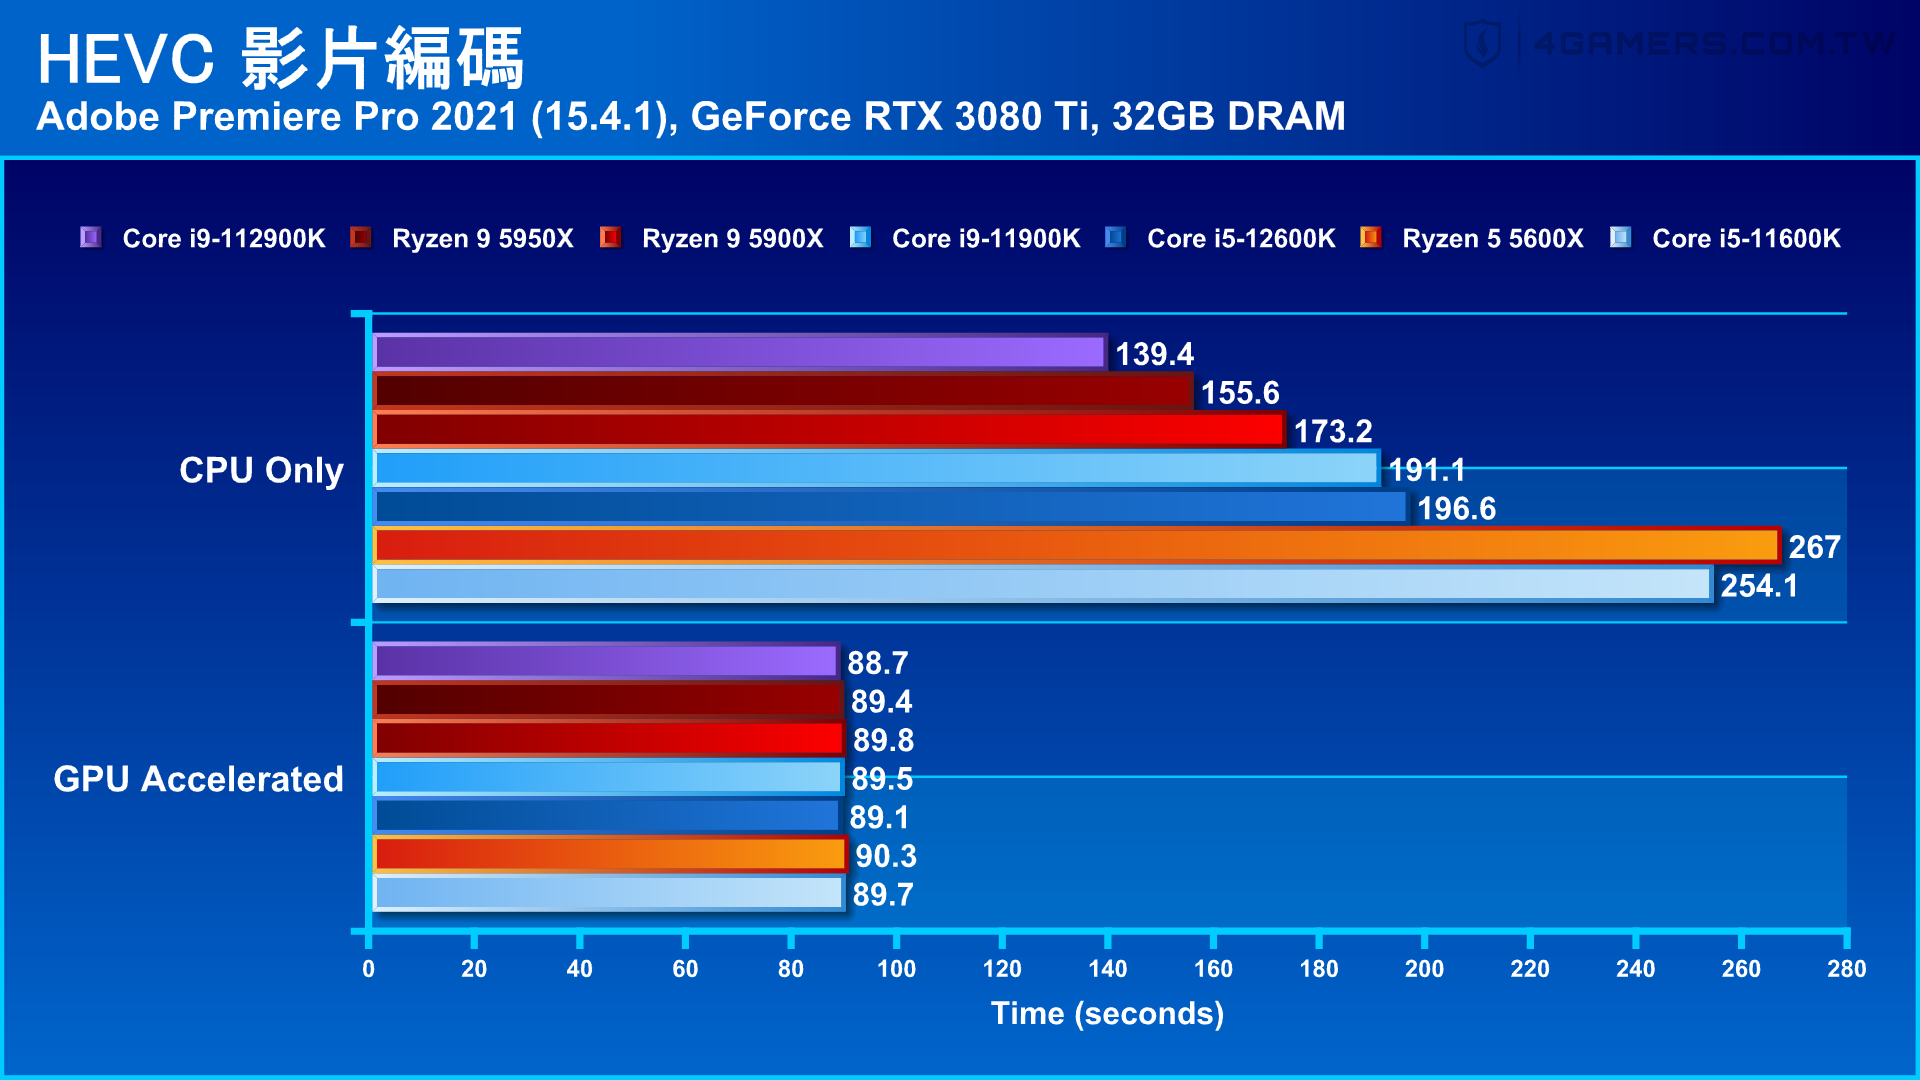 Intel Core i9-12900K and Core i5-12600K